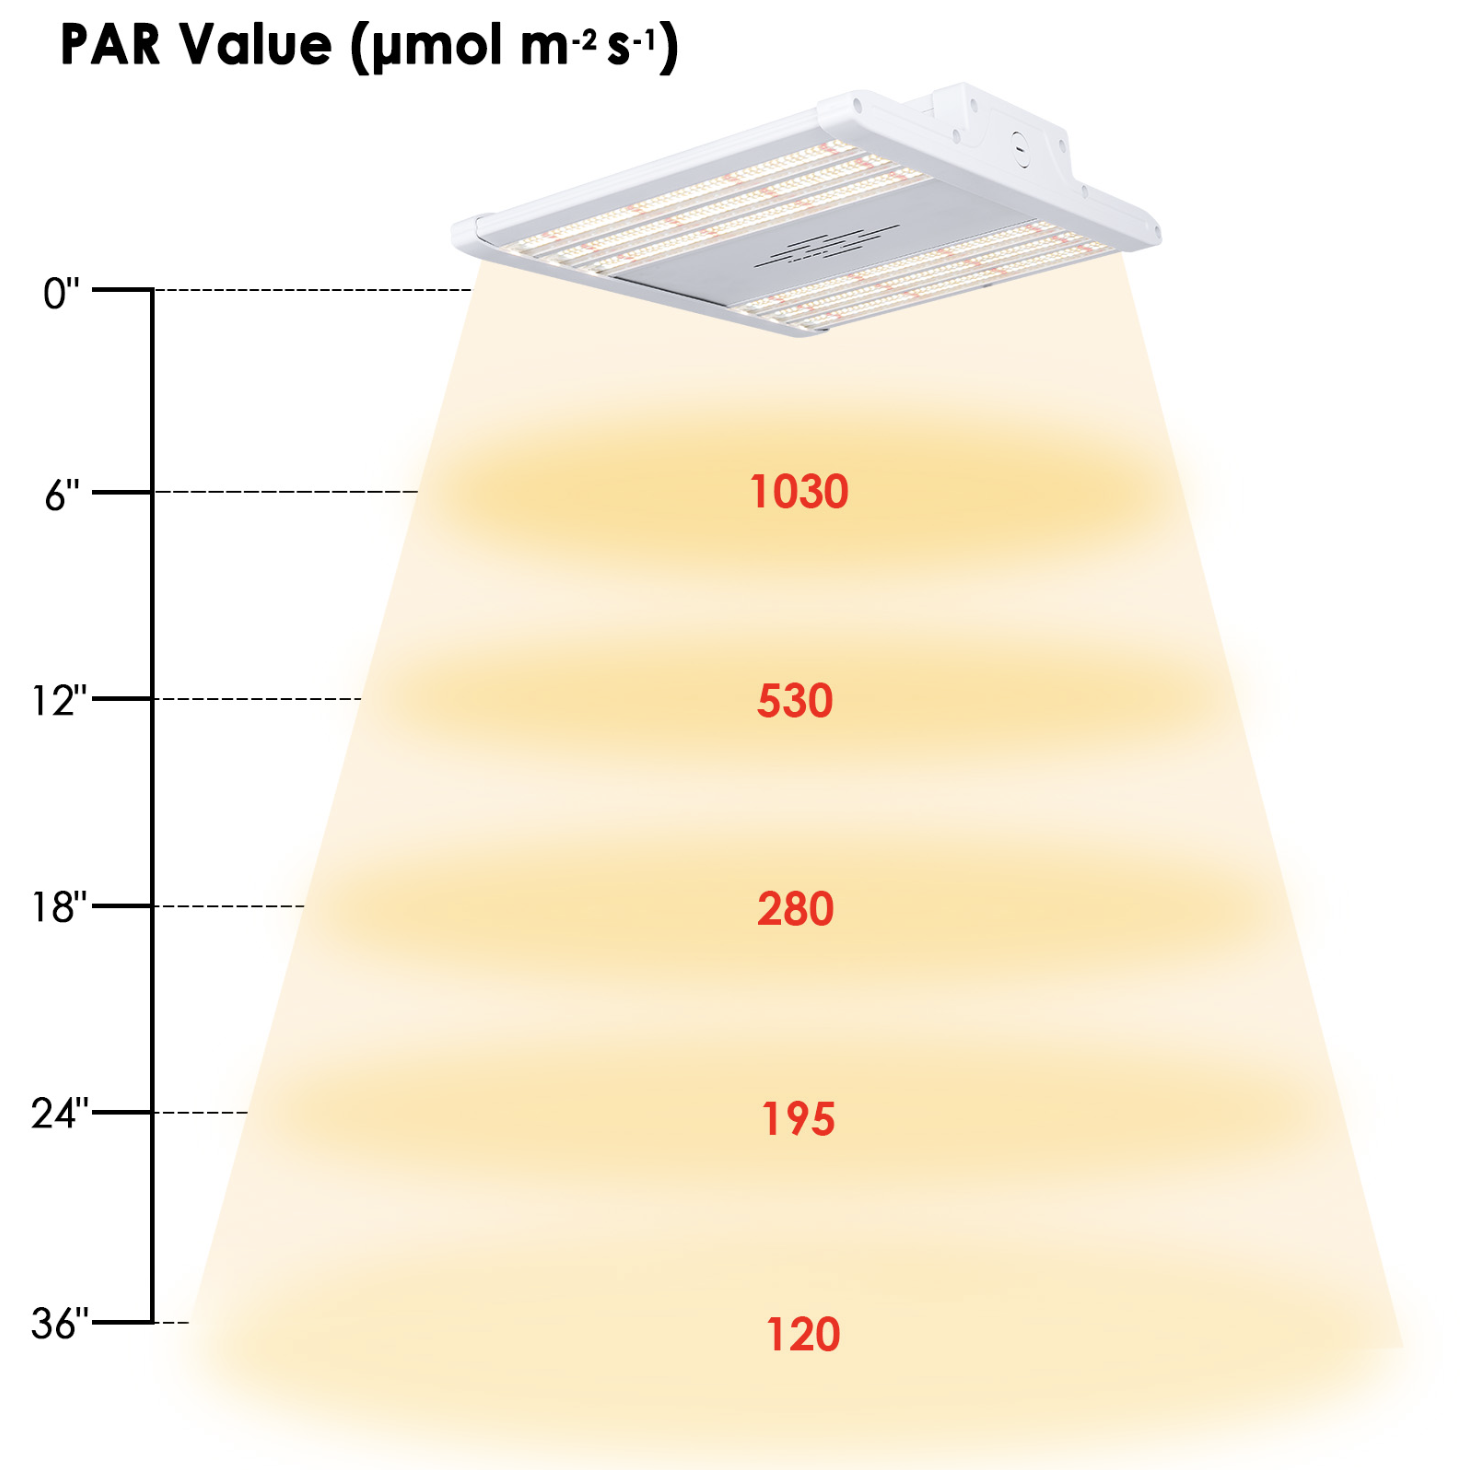 100 Watt Panels - Viparspectra VP Series VP1000